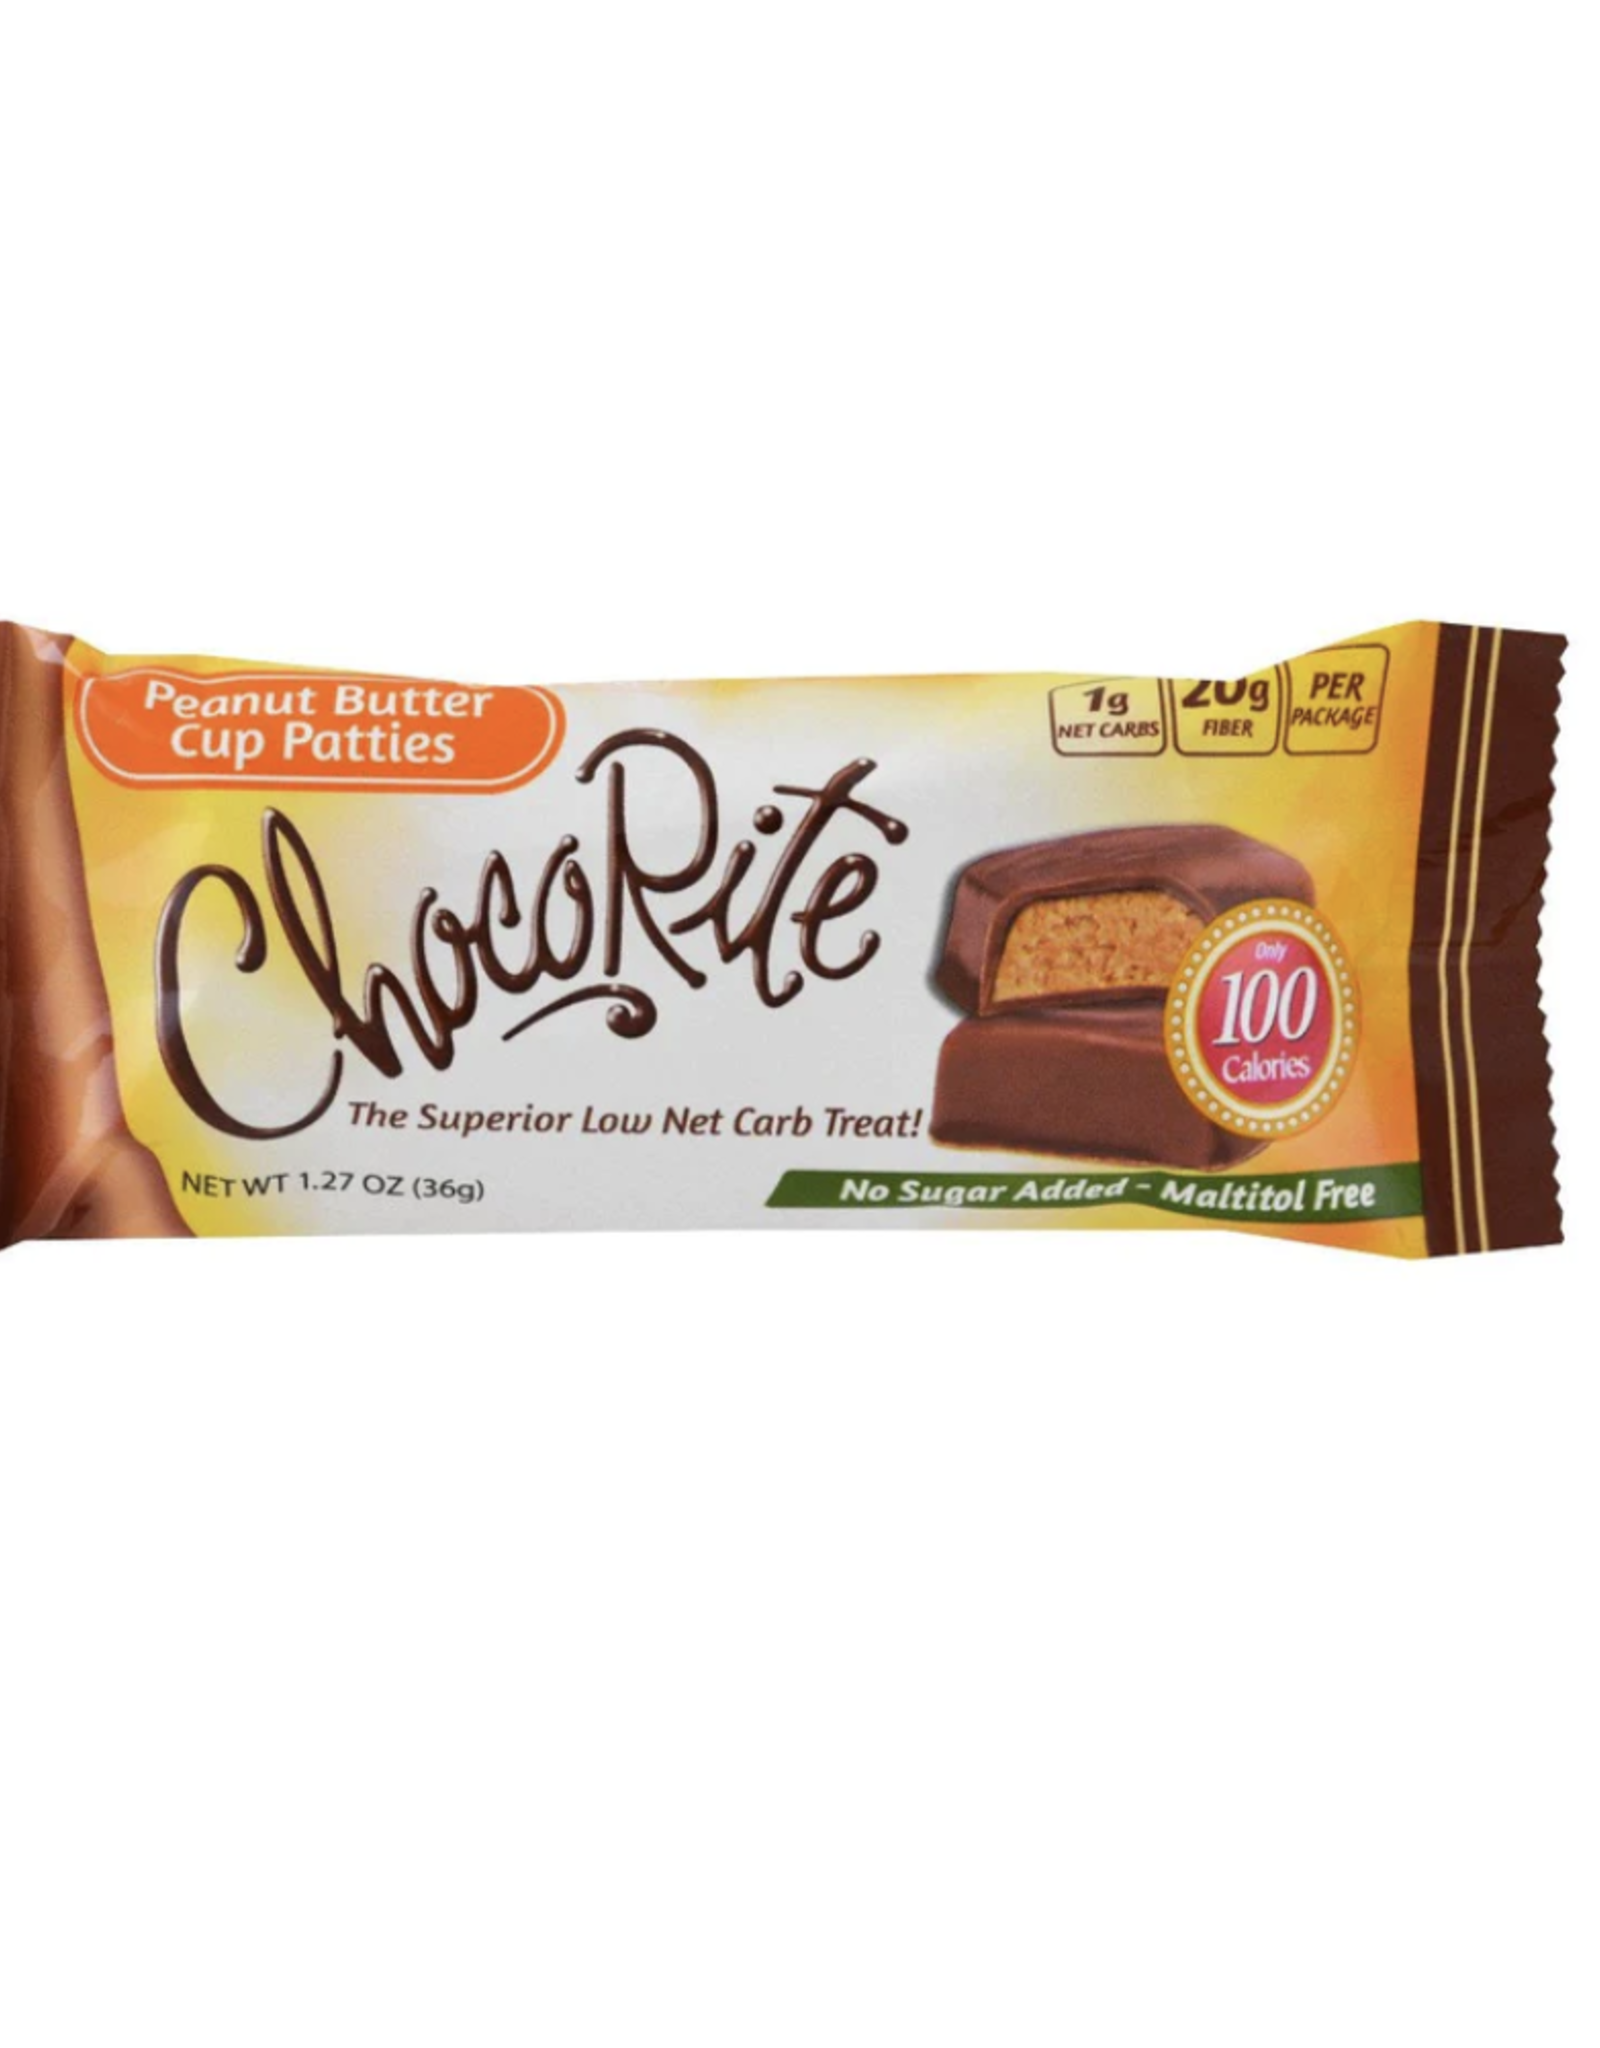 ChocoRite ChocoRite Single Peanut Butter Patties